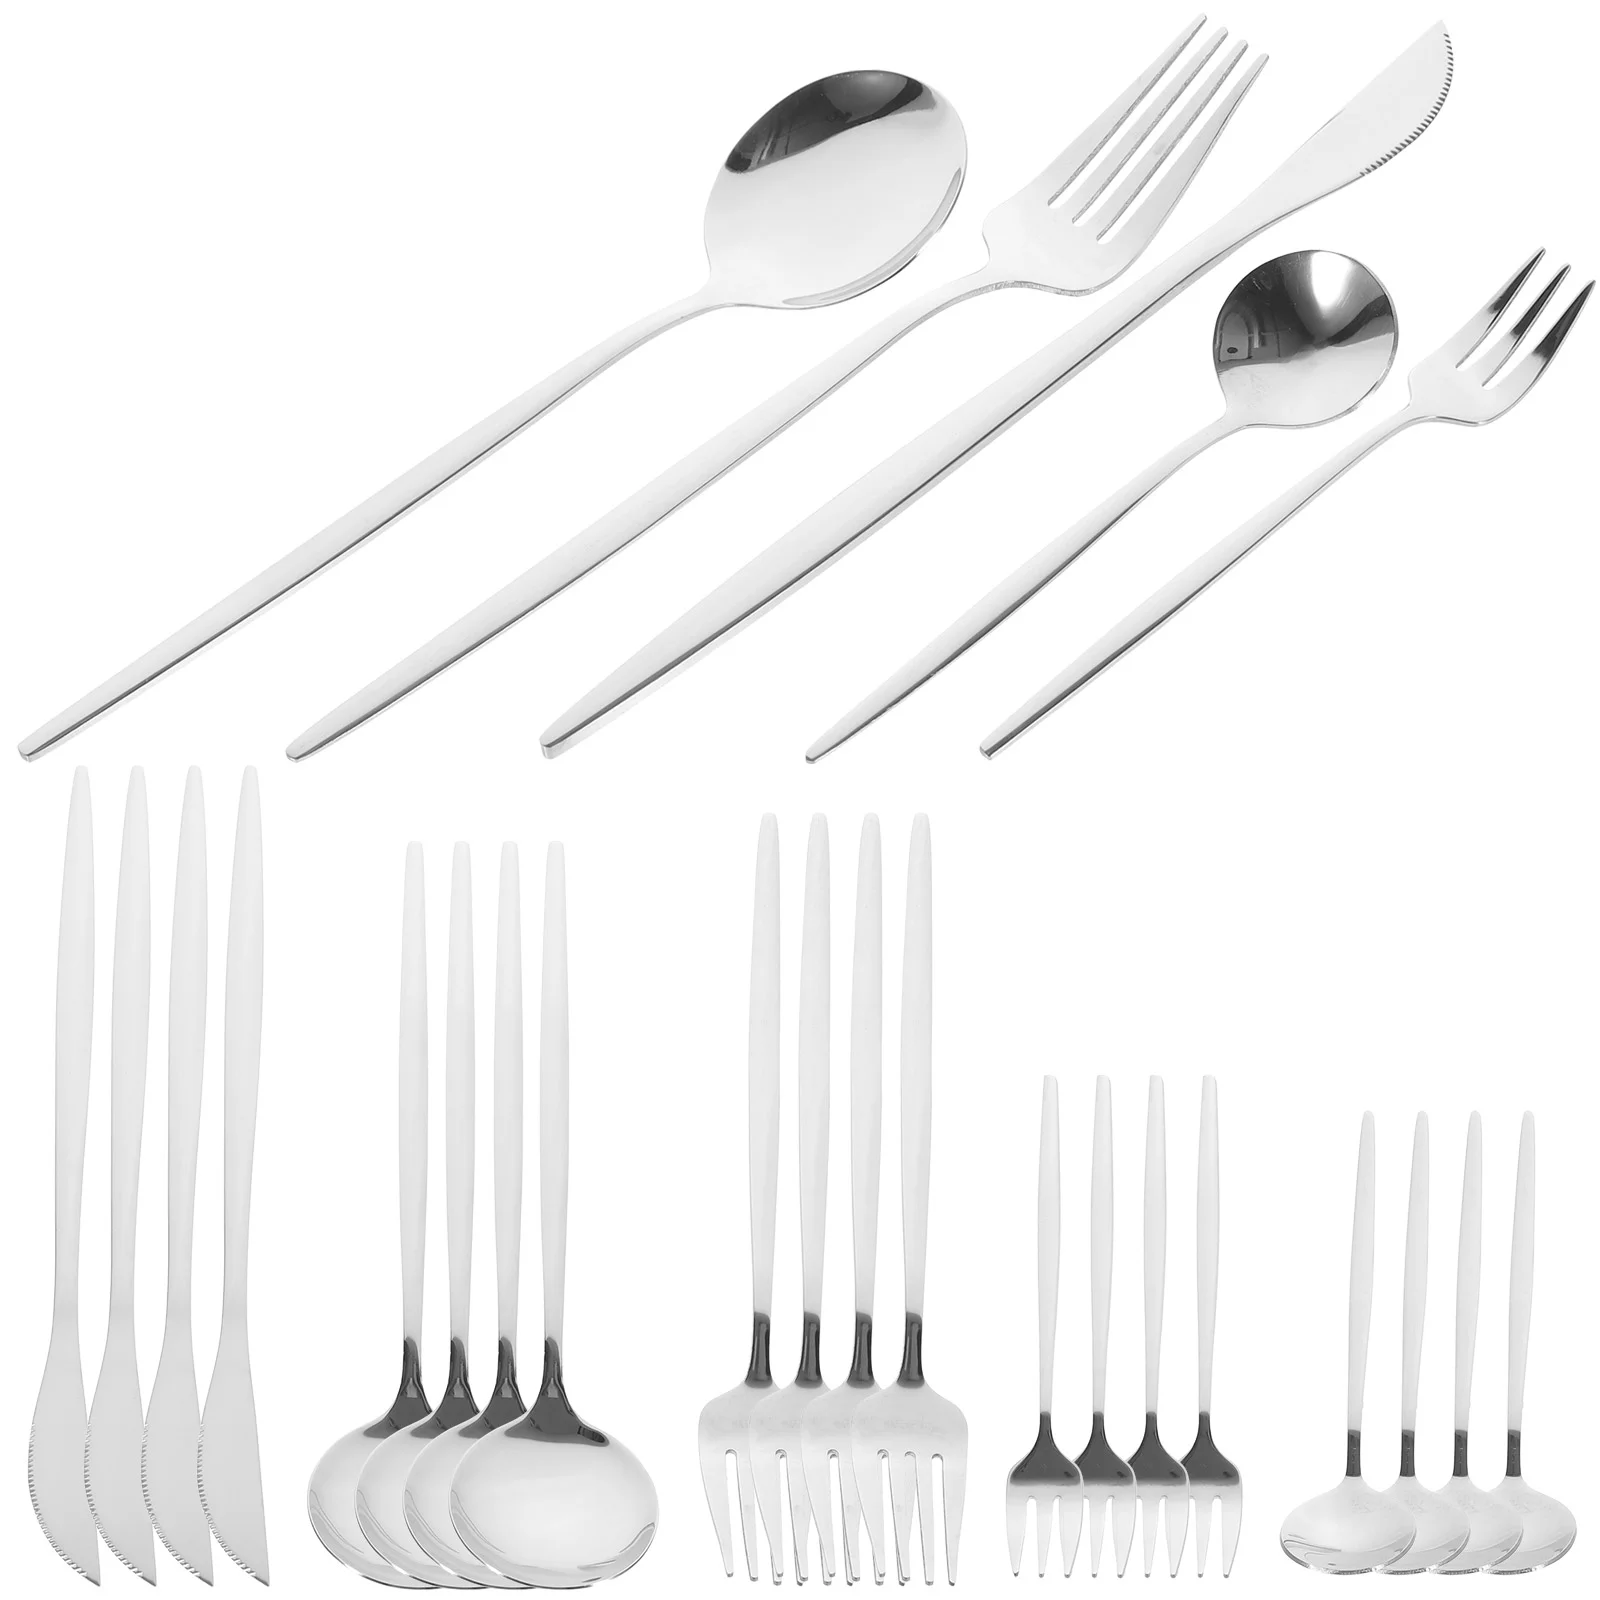 

30 Pcs Silverware Sets Utensil Sets Cutlery Set Stainless Steel Flatware Spoon Fork Knives